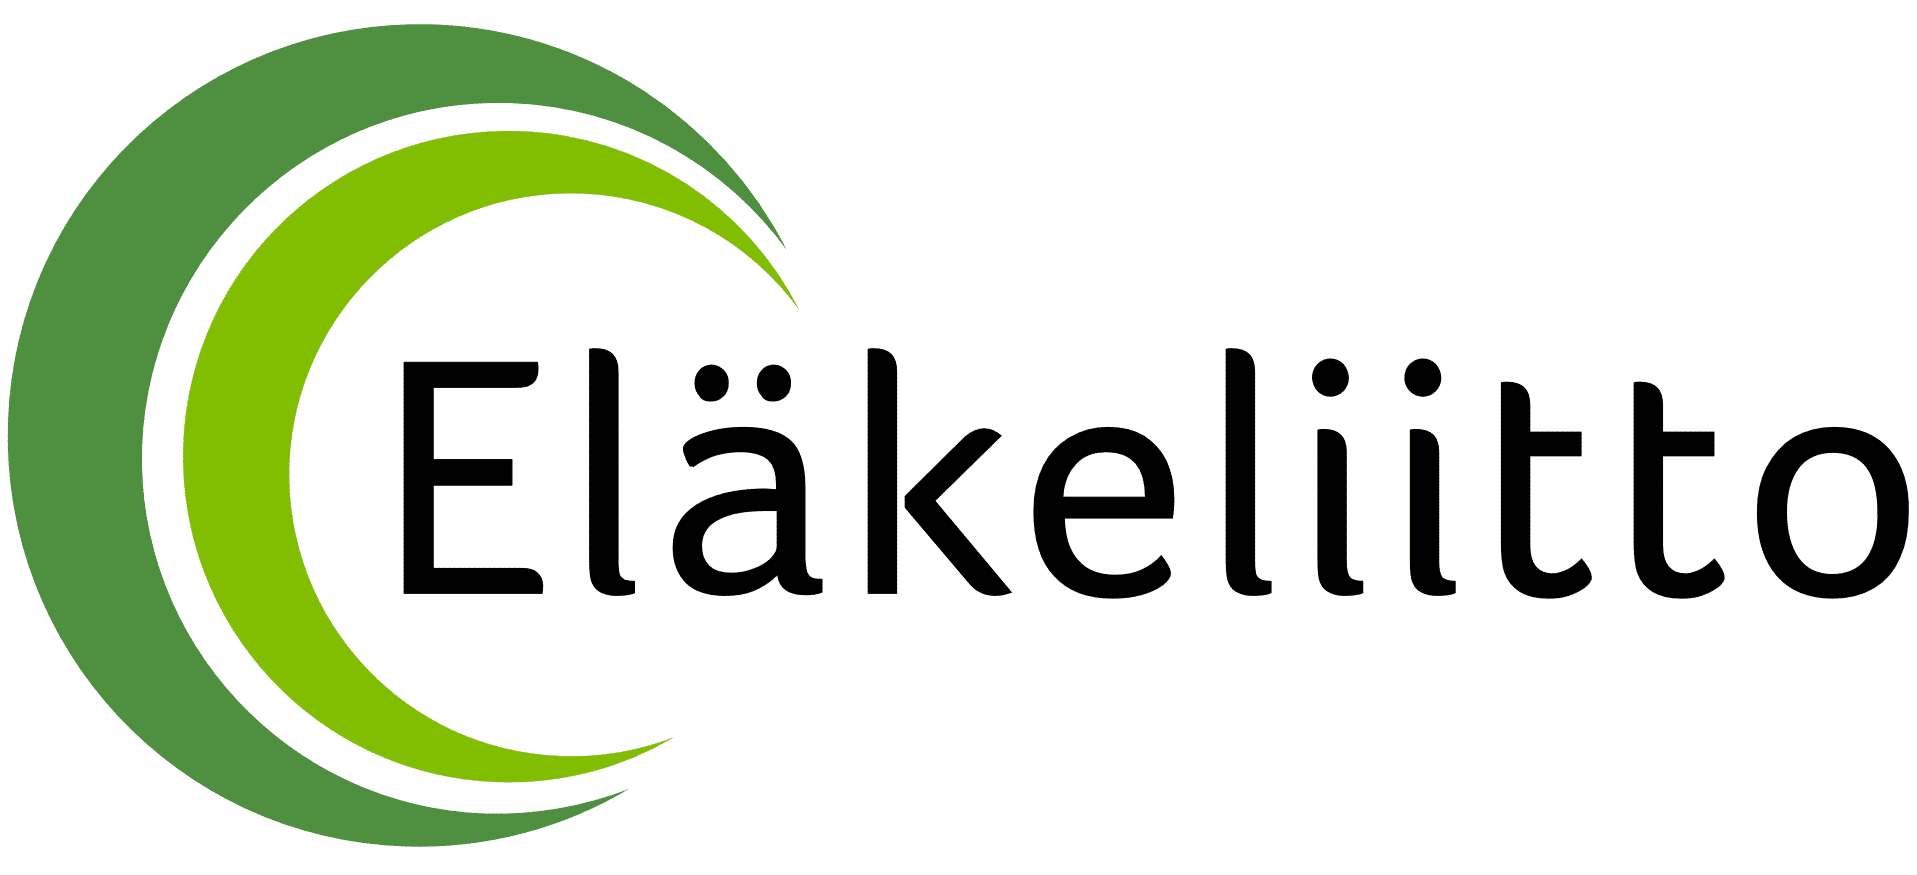 Elakeliitto-FinnishPensionerOrganisation_logo